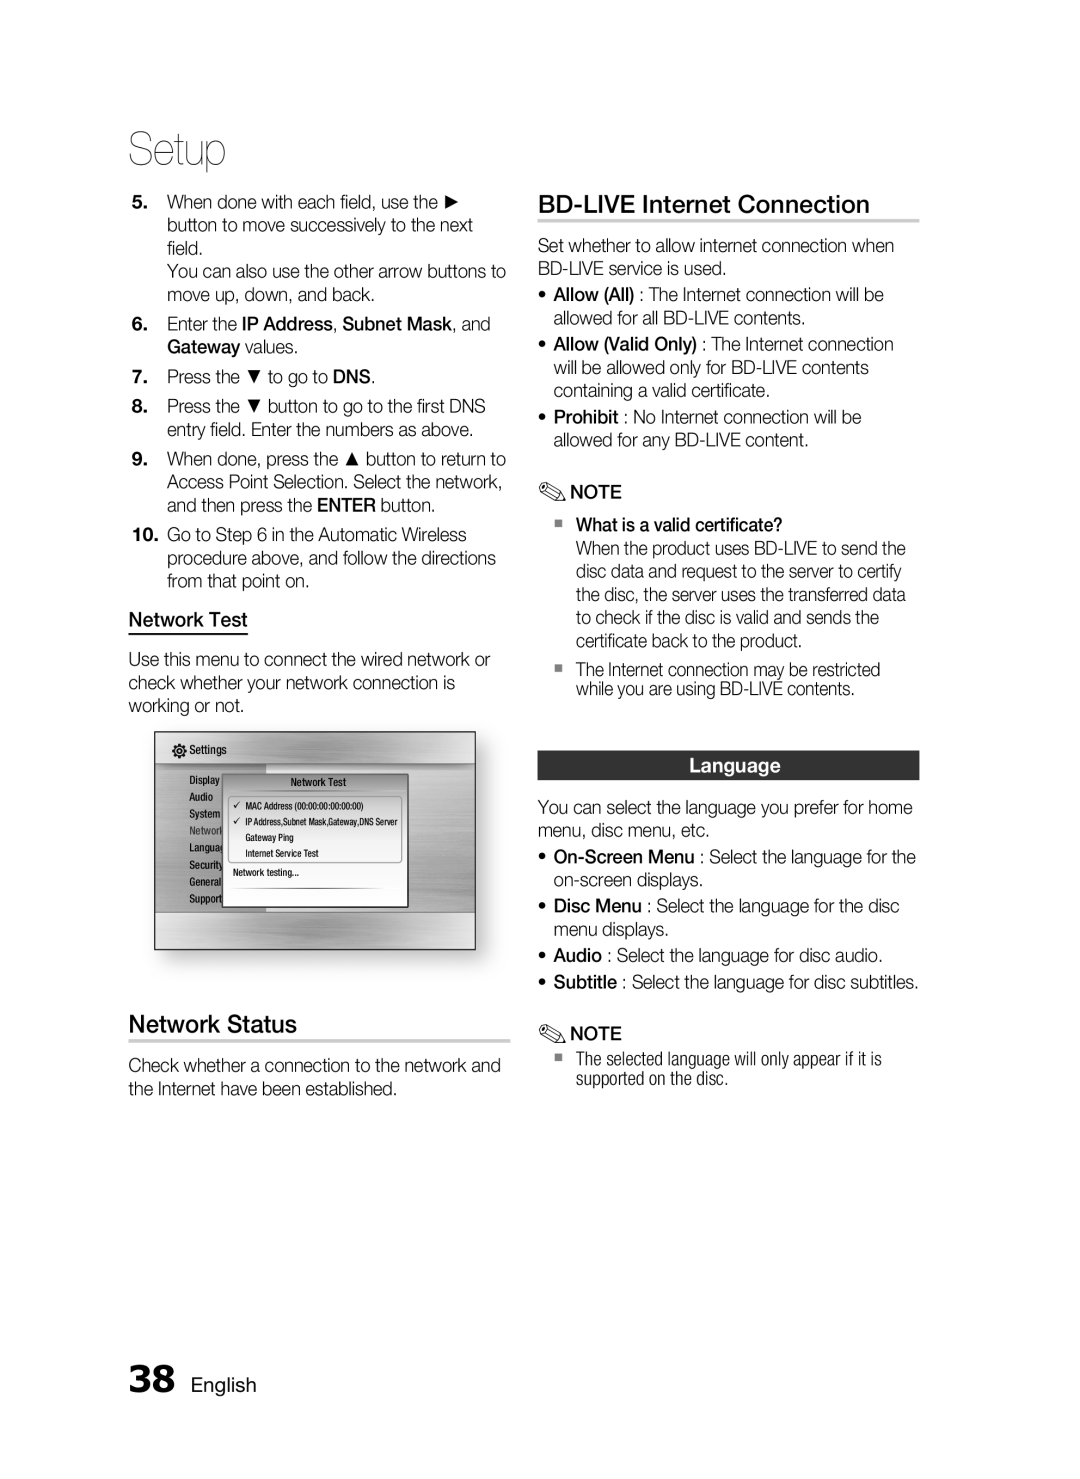 Samsung HT-C5200 user manual BD-LIVEInternet Connection, Network Status, Network Test, Language, English, Setup 